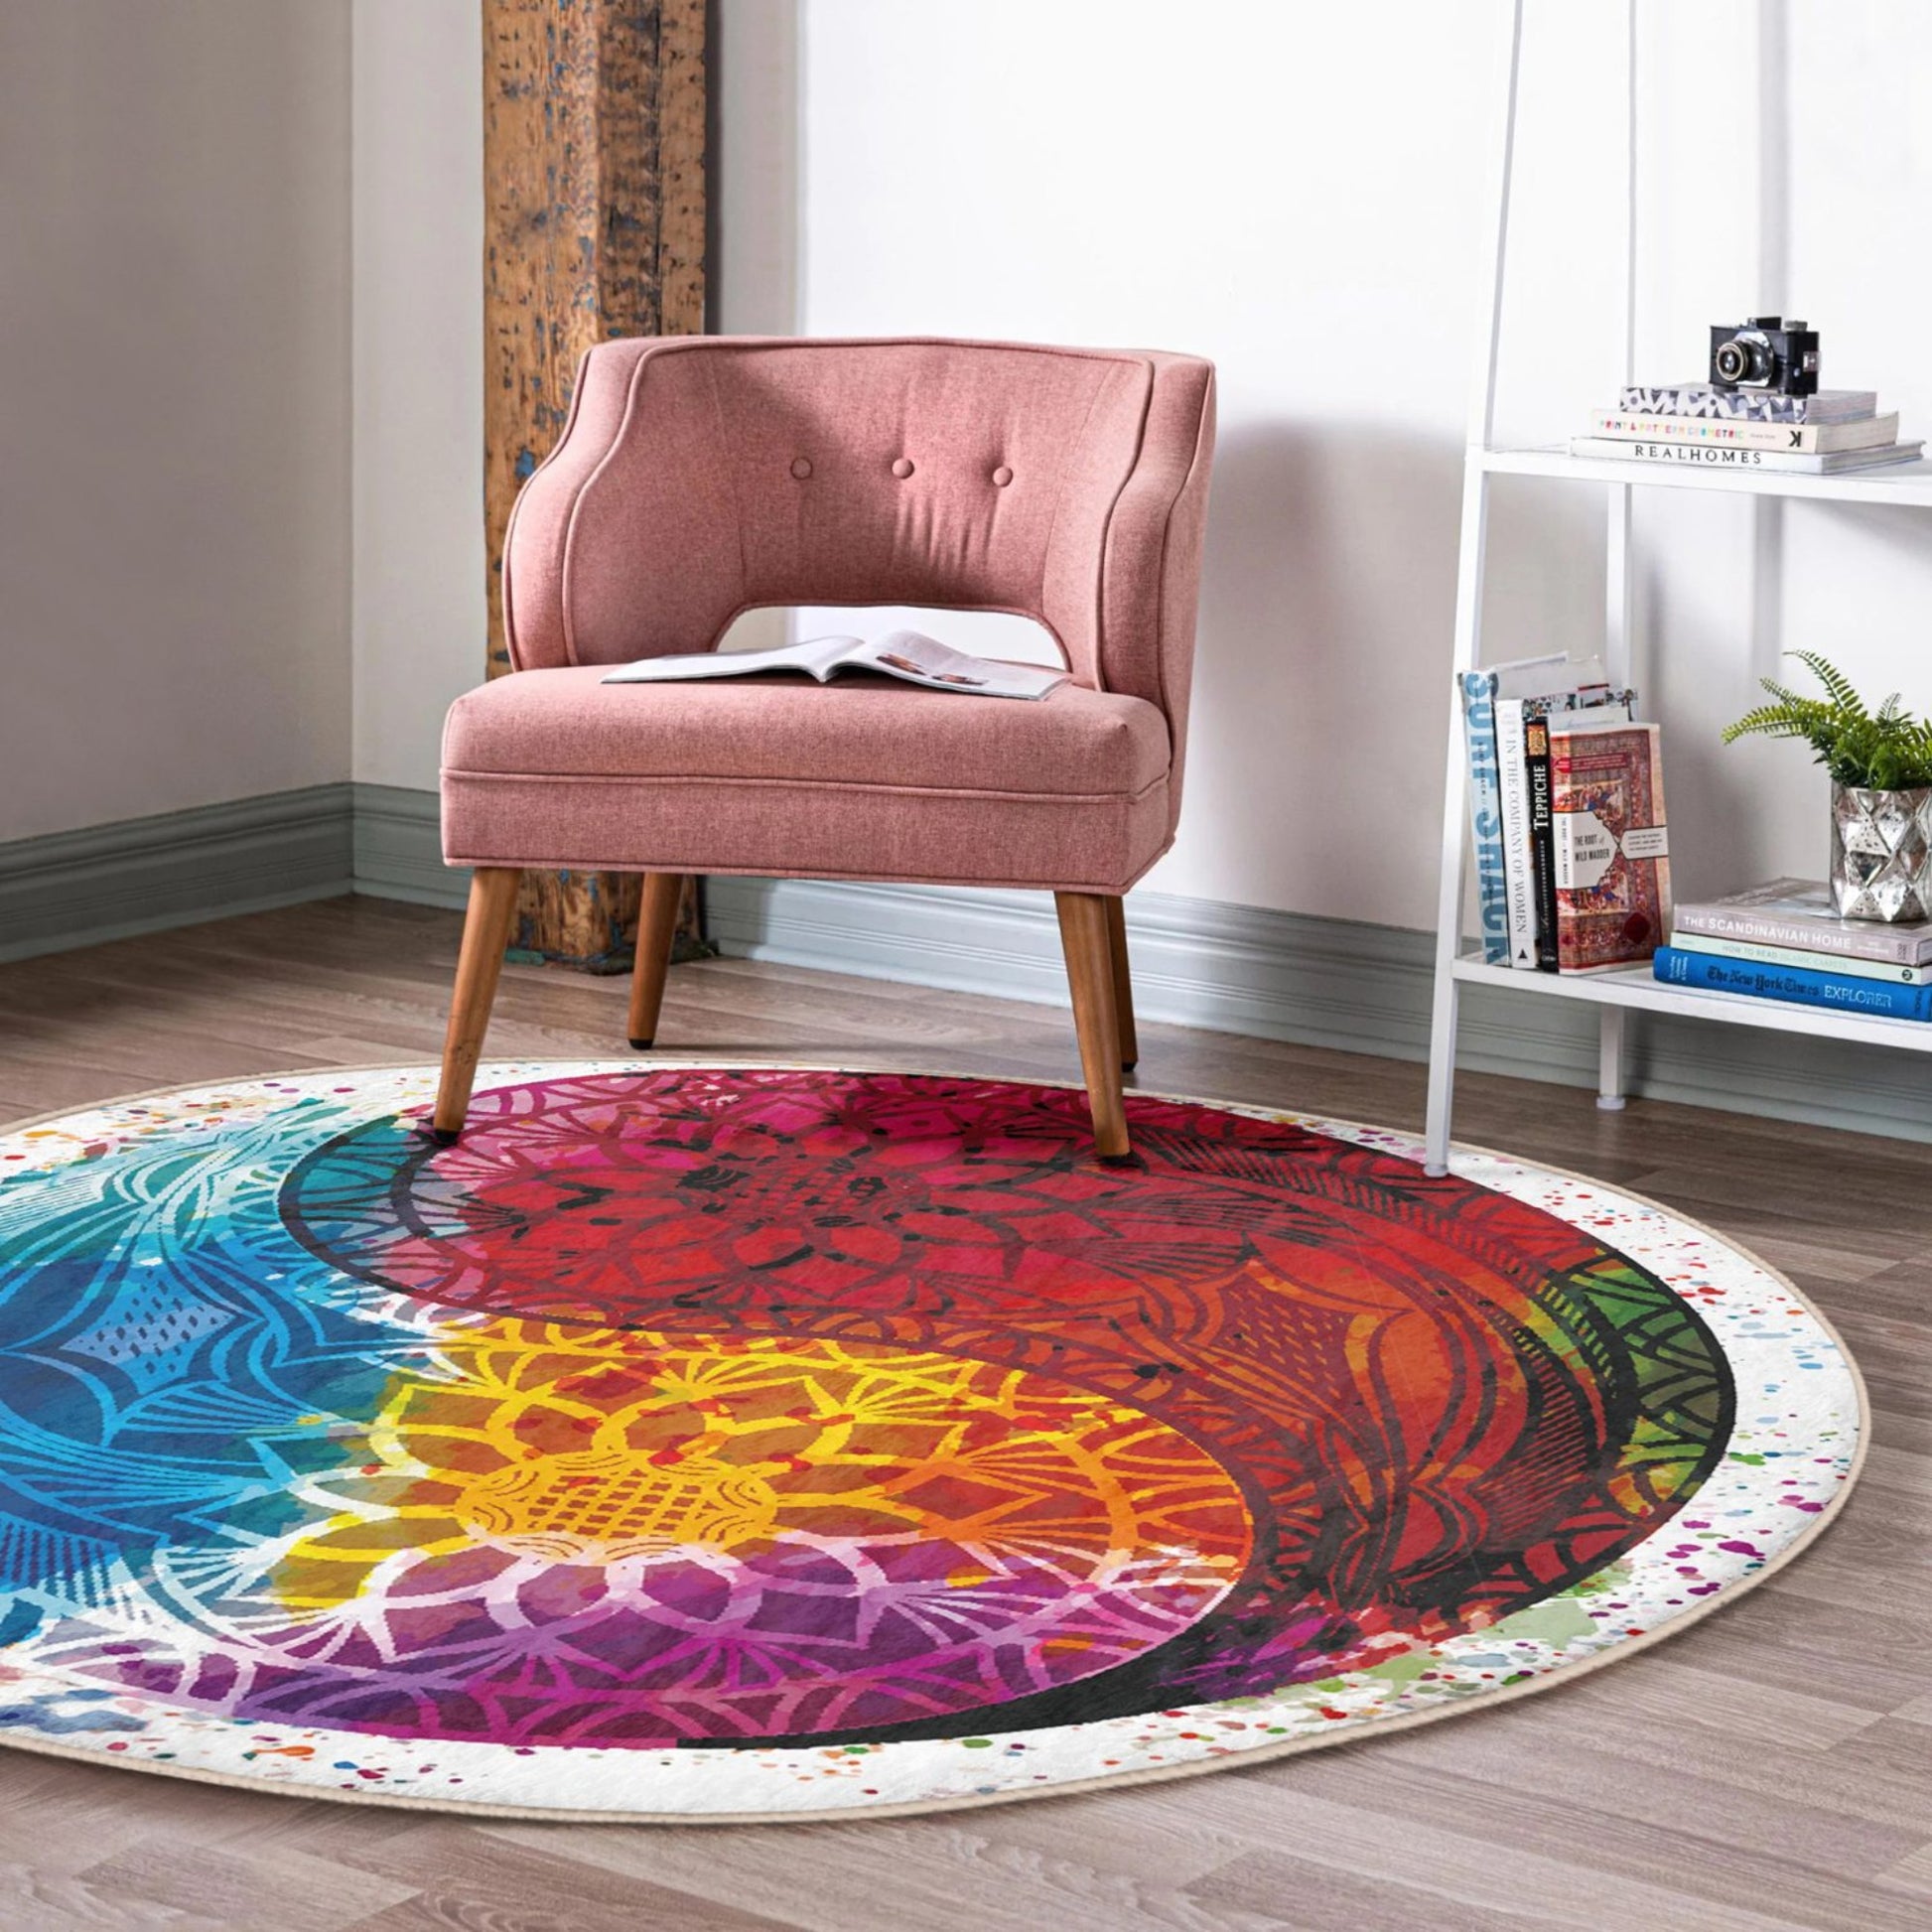 Round Patterned Floor Rug - Meditation Room Accent